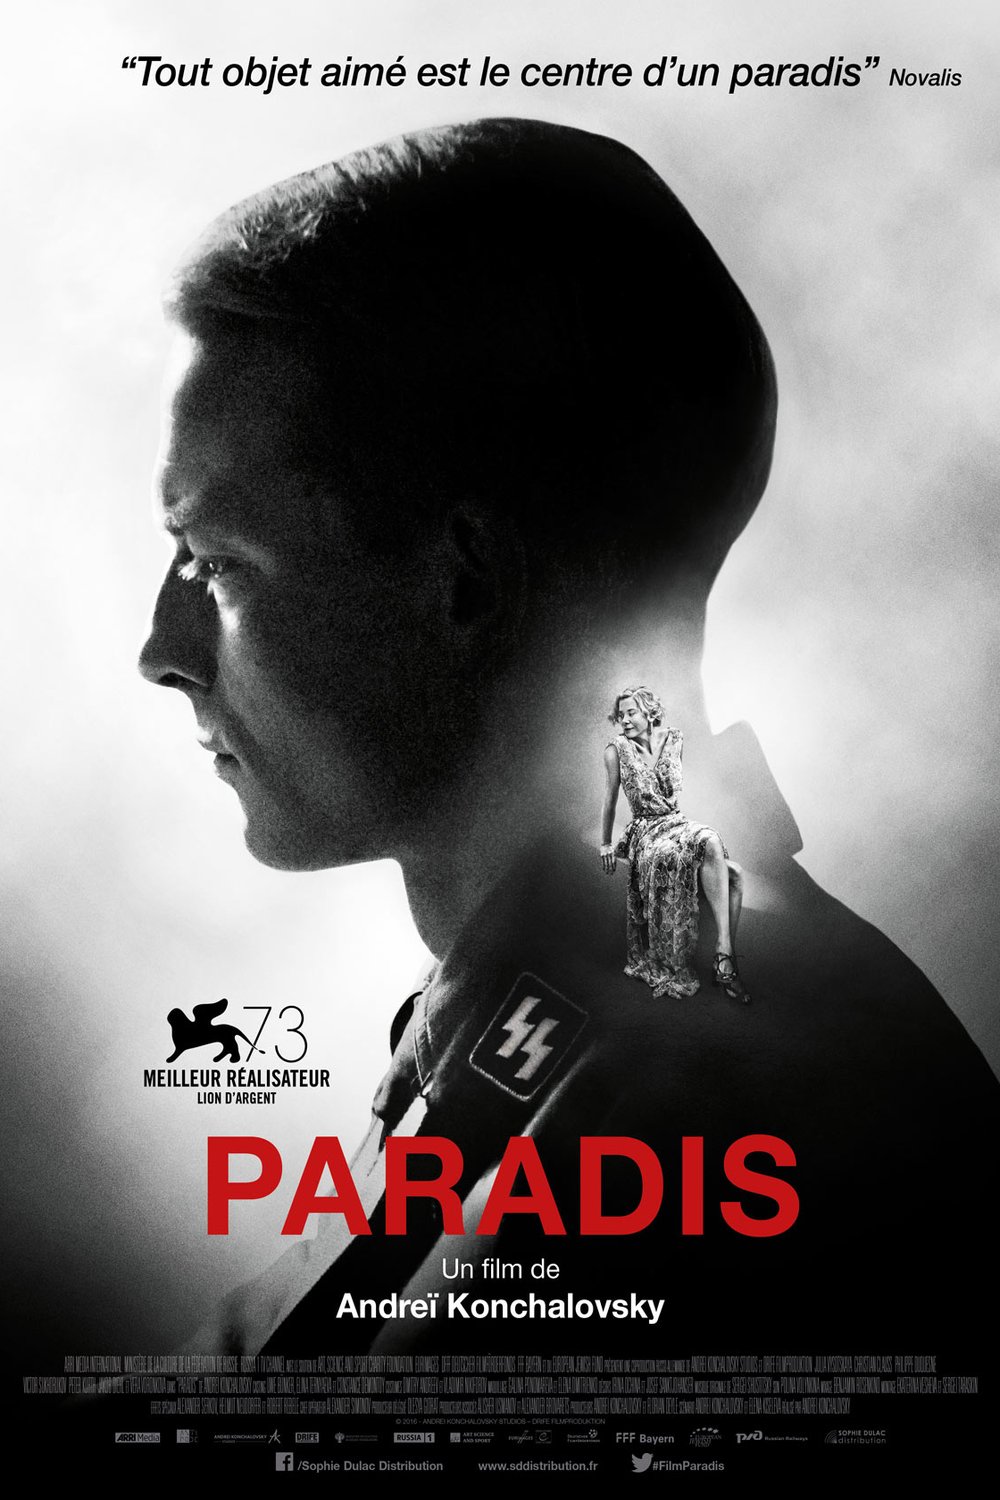 Poster of the movie Paradis v.f.